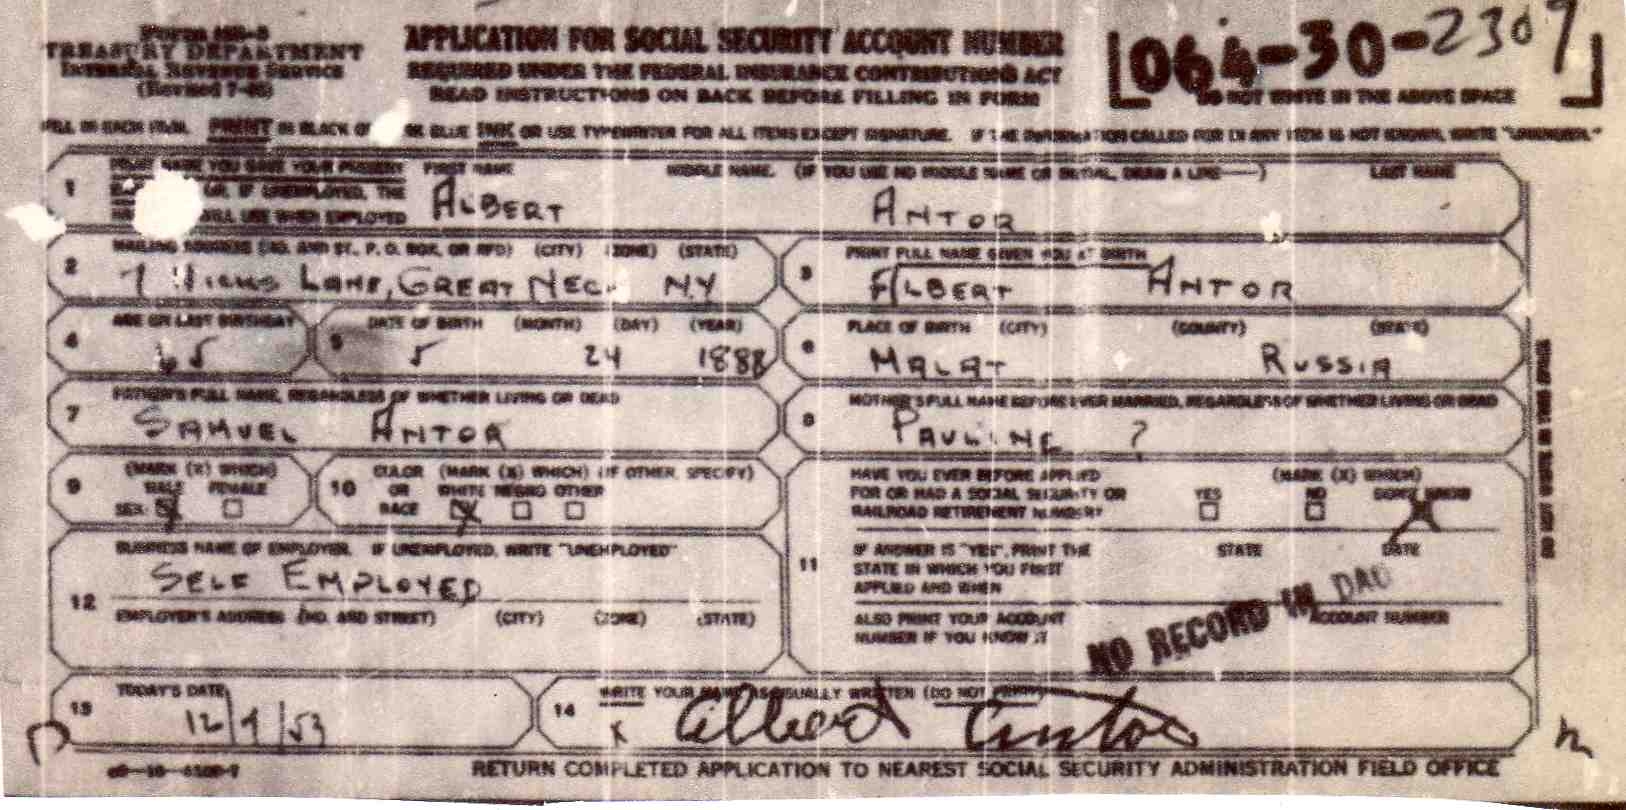 Social Security Application for Albert Antor